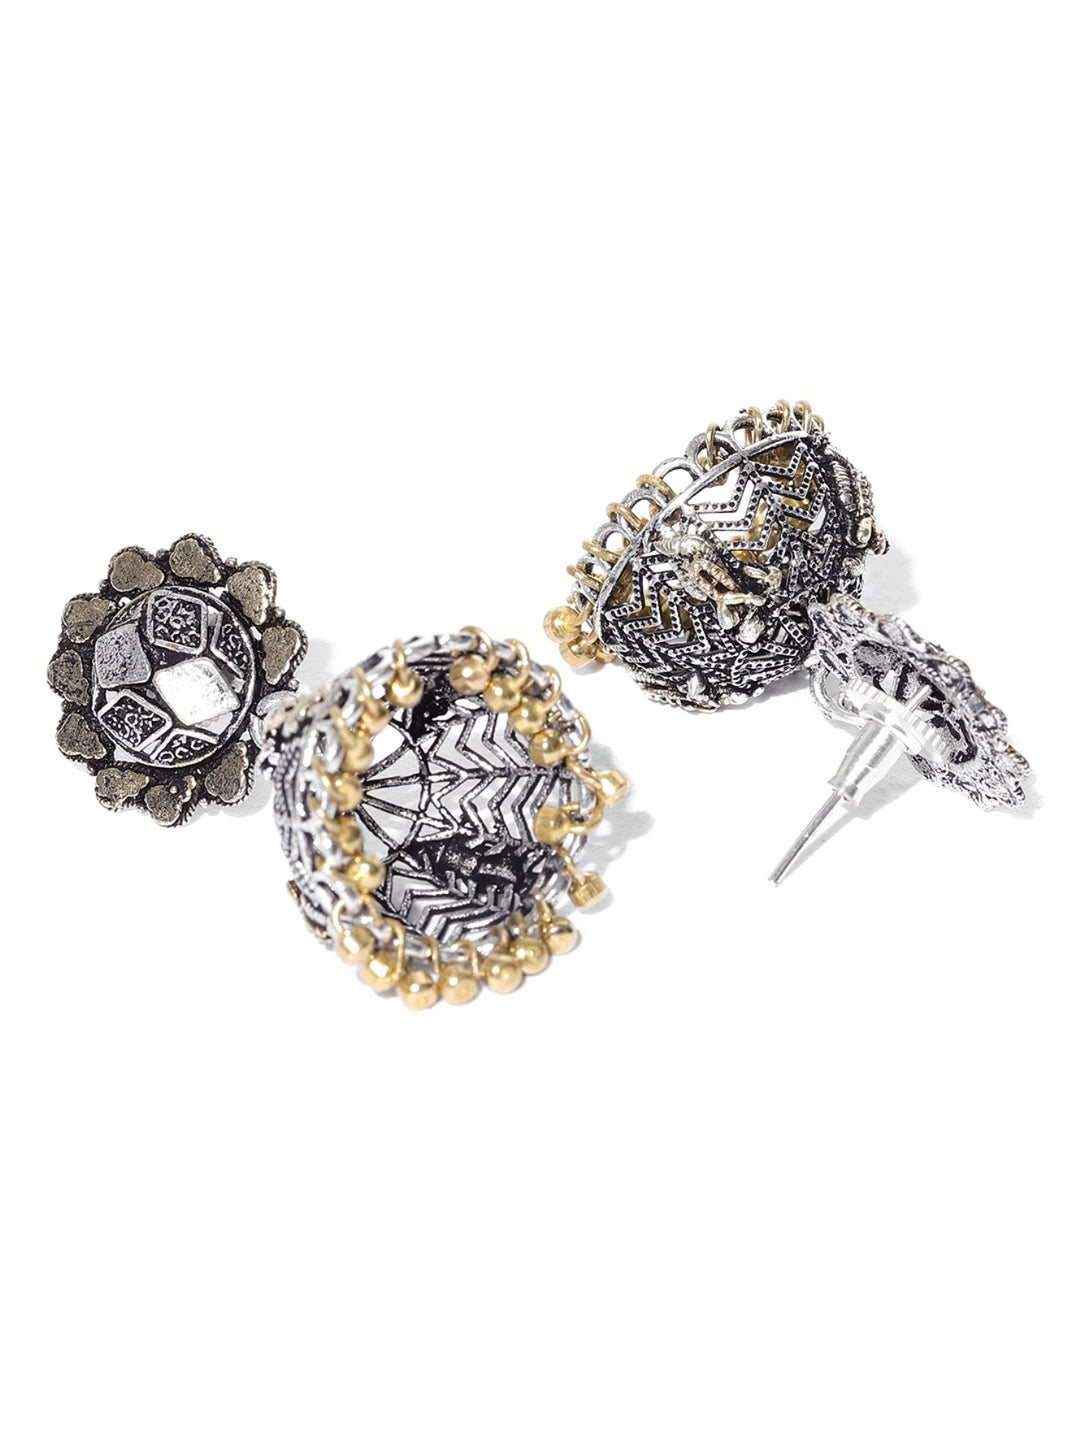 Designer German Silver With Golden Colour Jhumki Earrings For Women And Girls